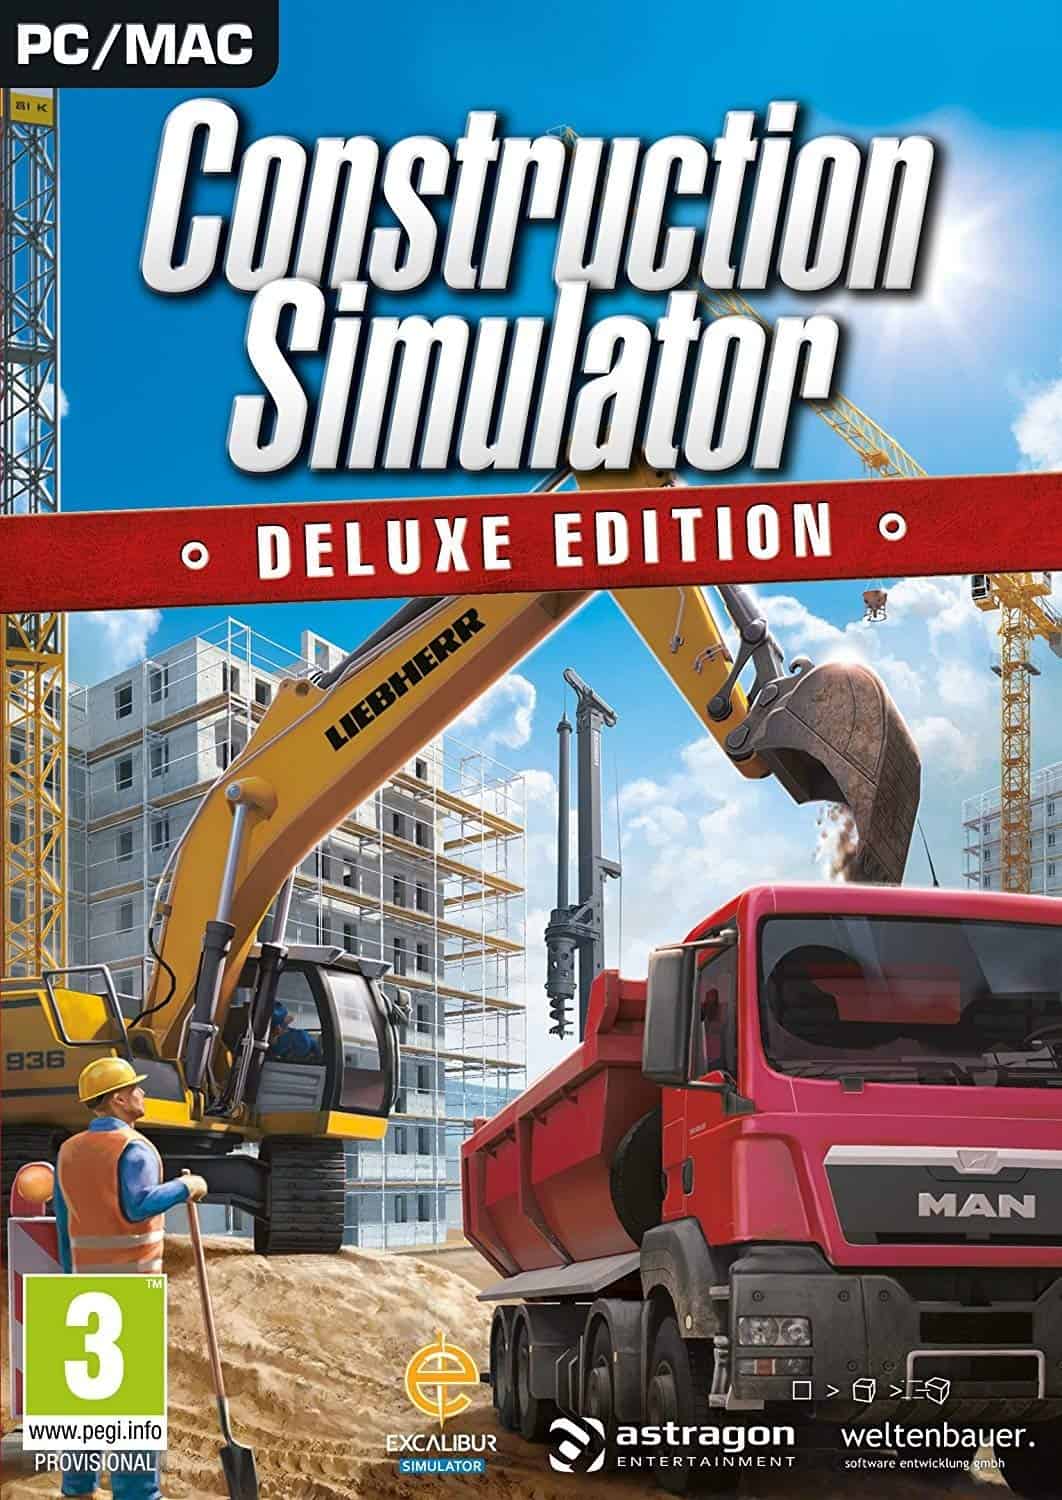 pc building simulator free download 2018